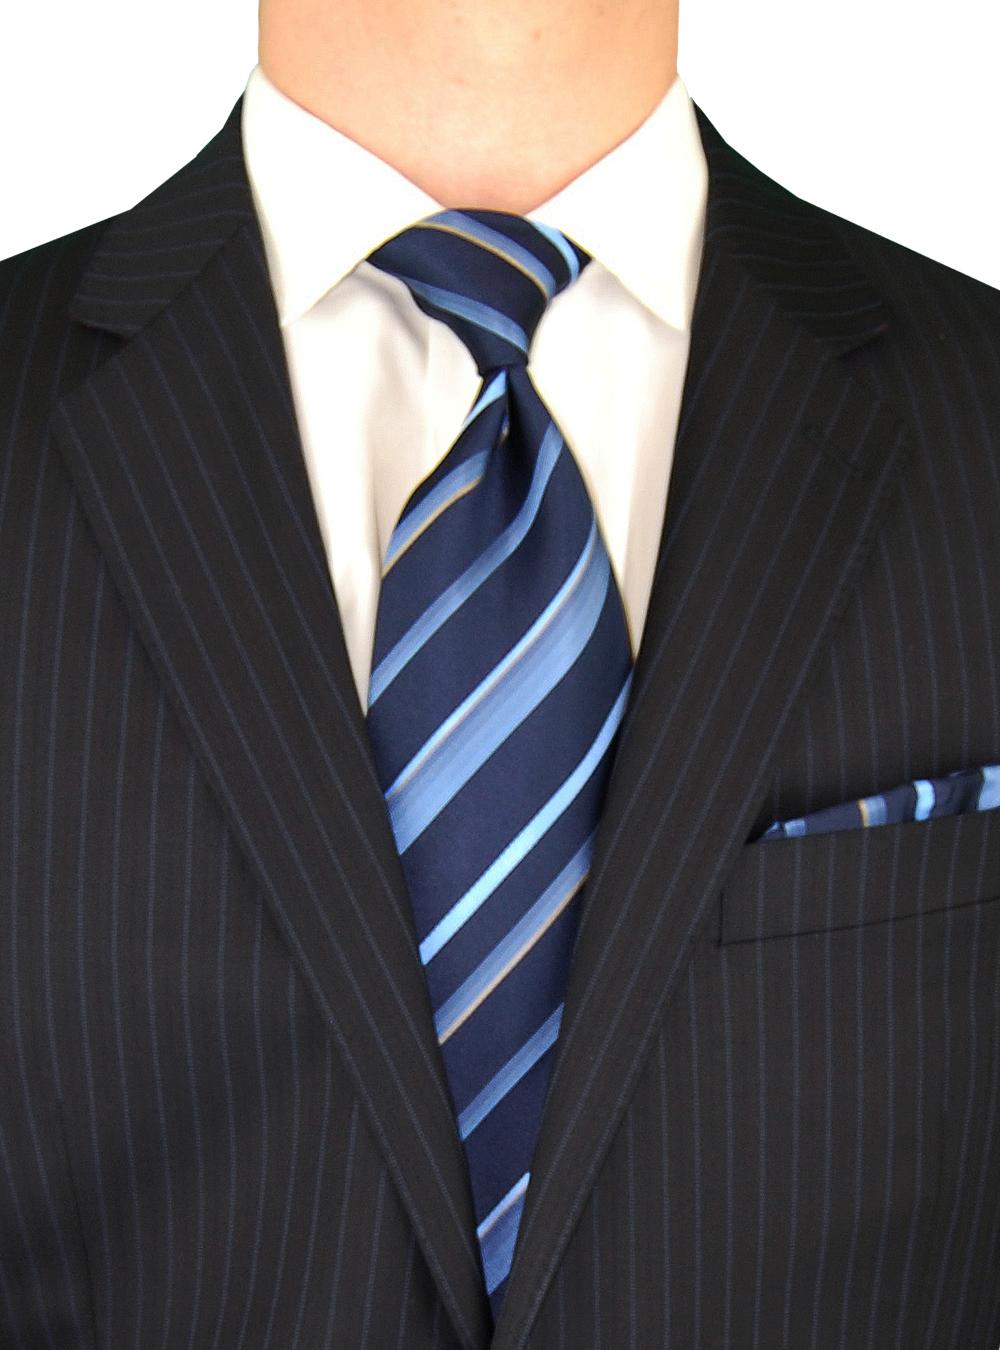 LN LUCIANO NATAZZI Italian Men's Suit 160'S Canali Cashmere Wool 2 Button Stripe Navy Stripe - image 3 of 5